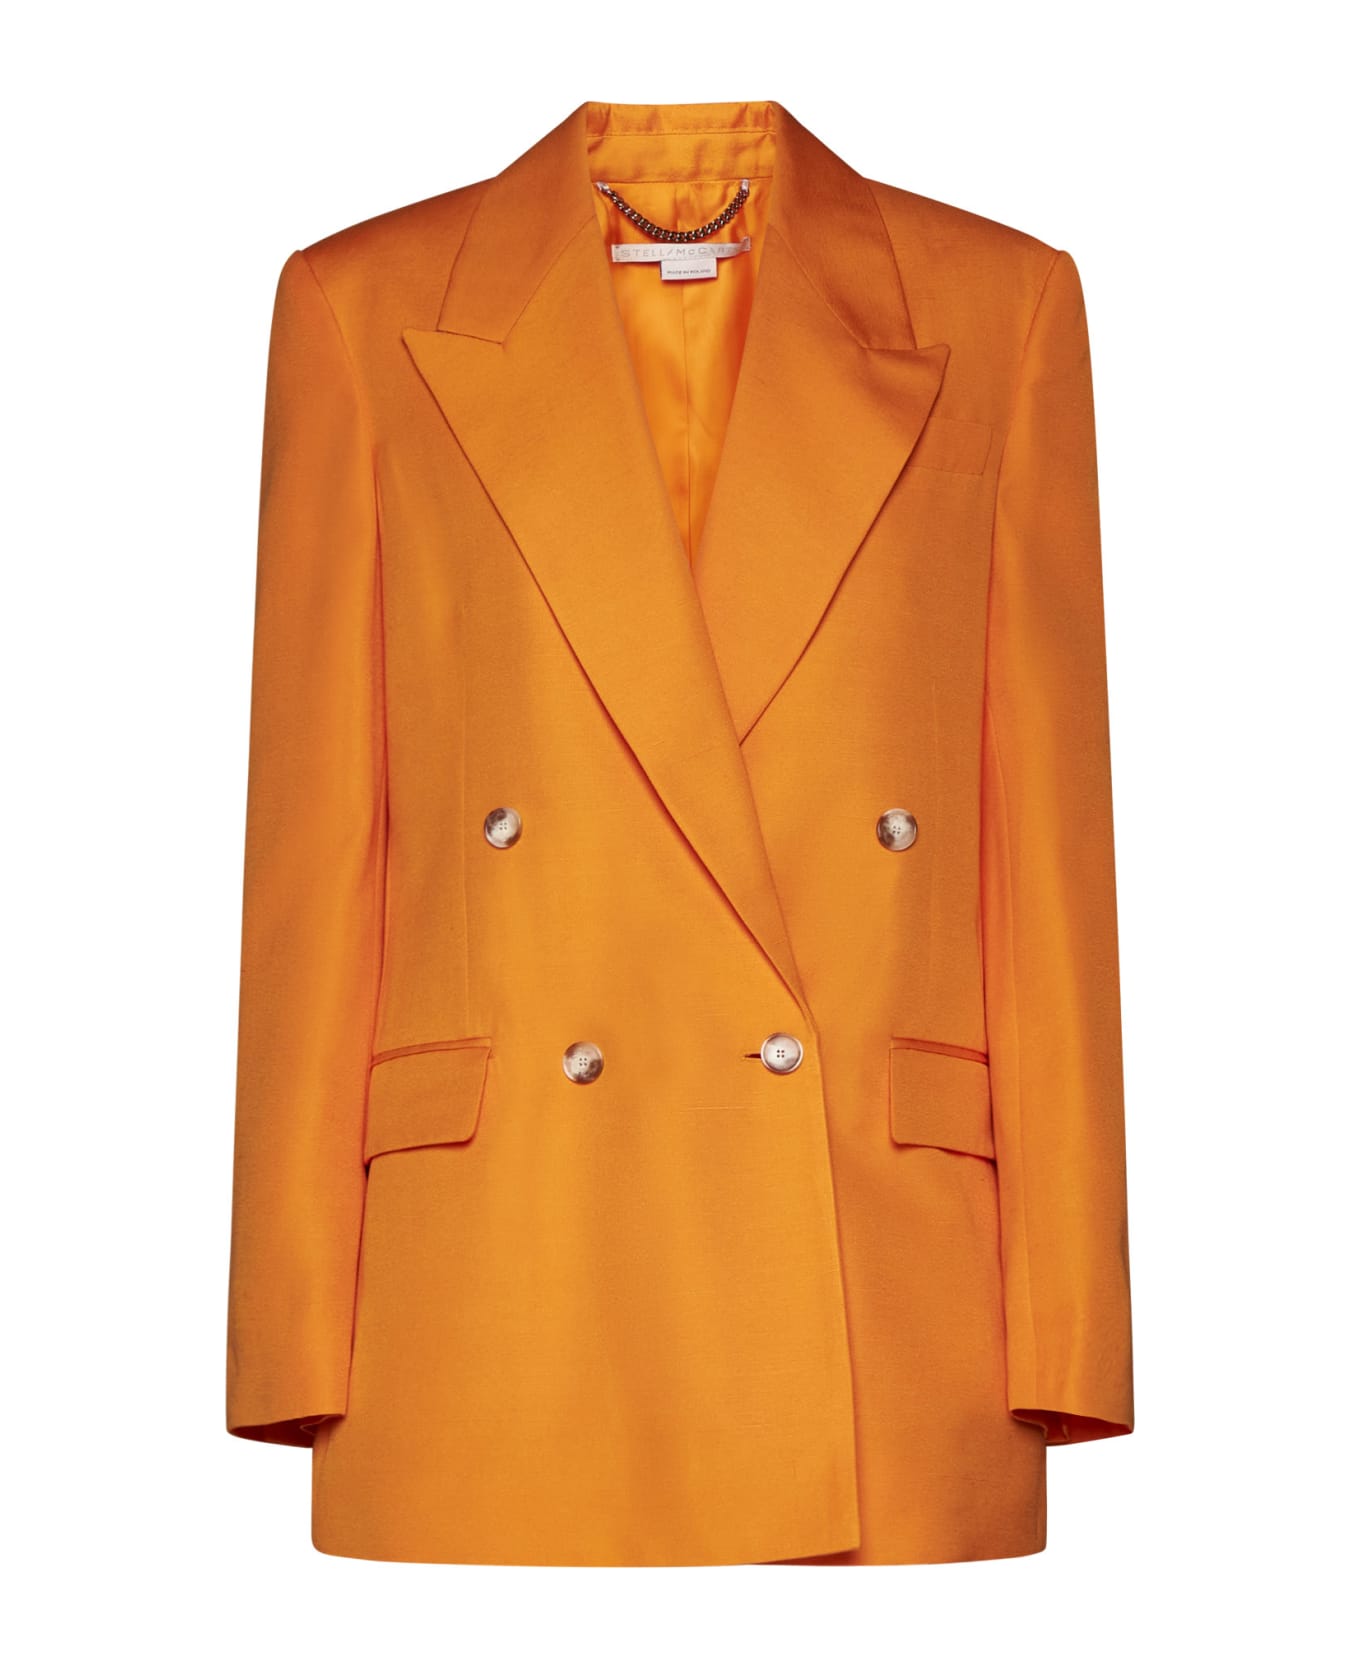 Stella McCartney Blazer - Bright orange